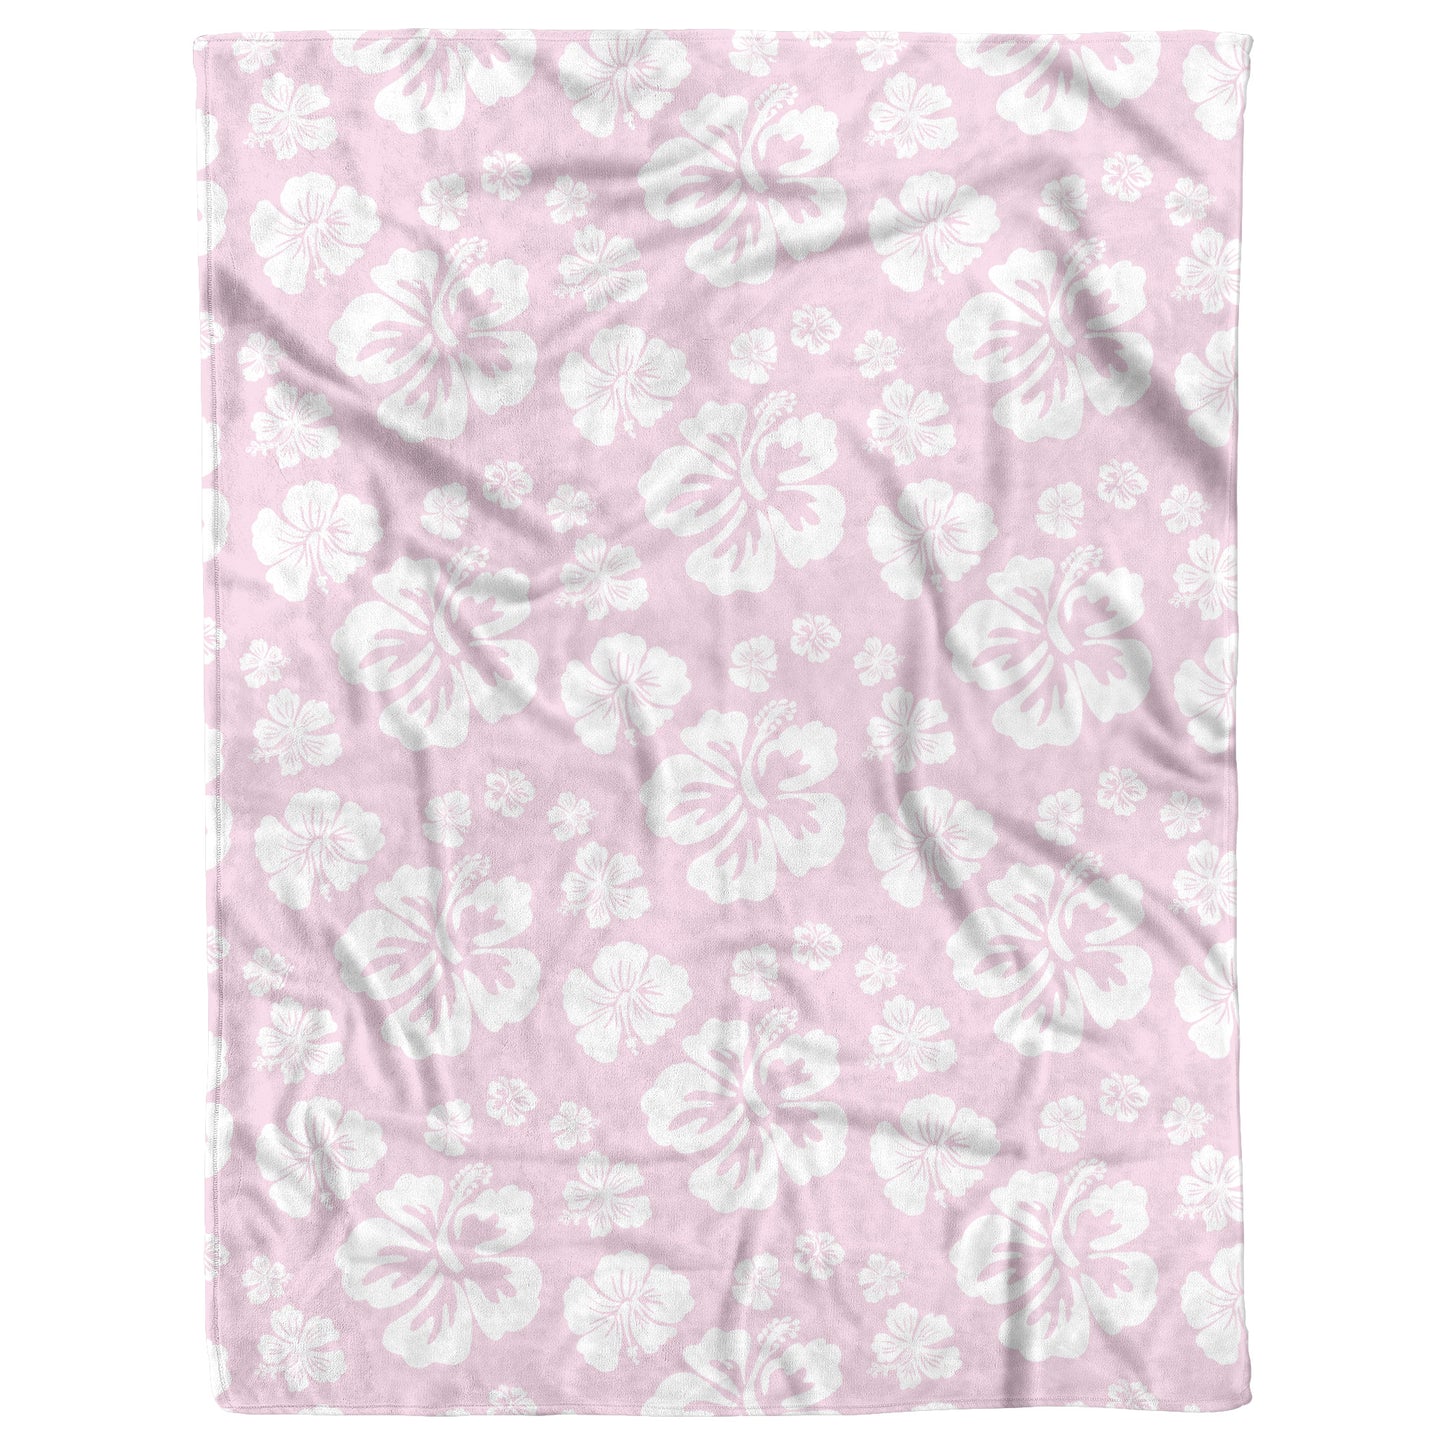 Hibiscus Soiree, White Hibiscus on Pink, Fleece Blanket